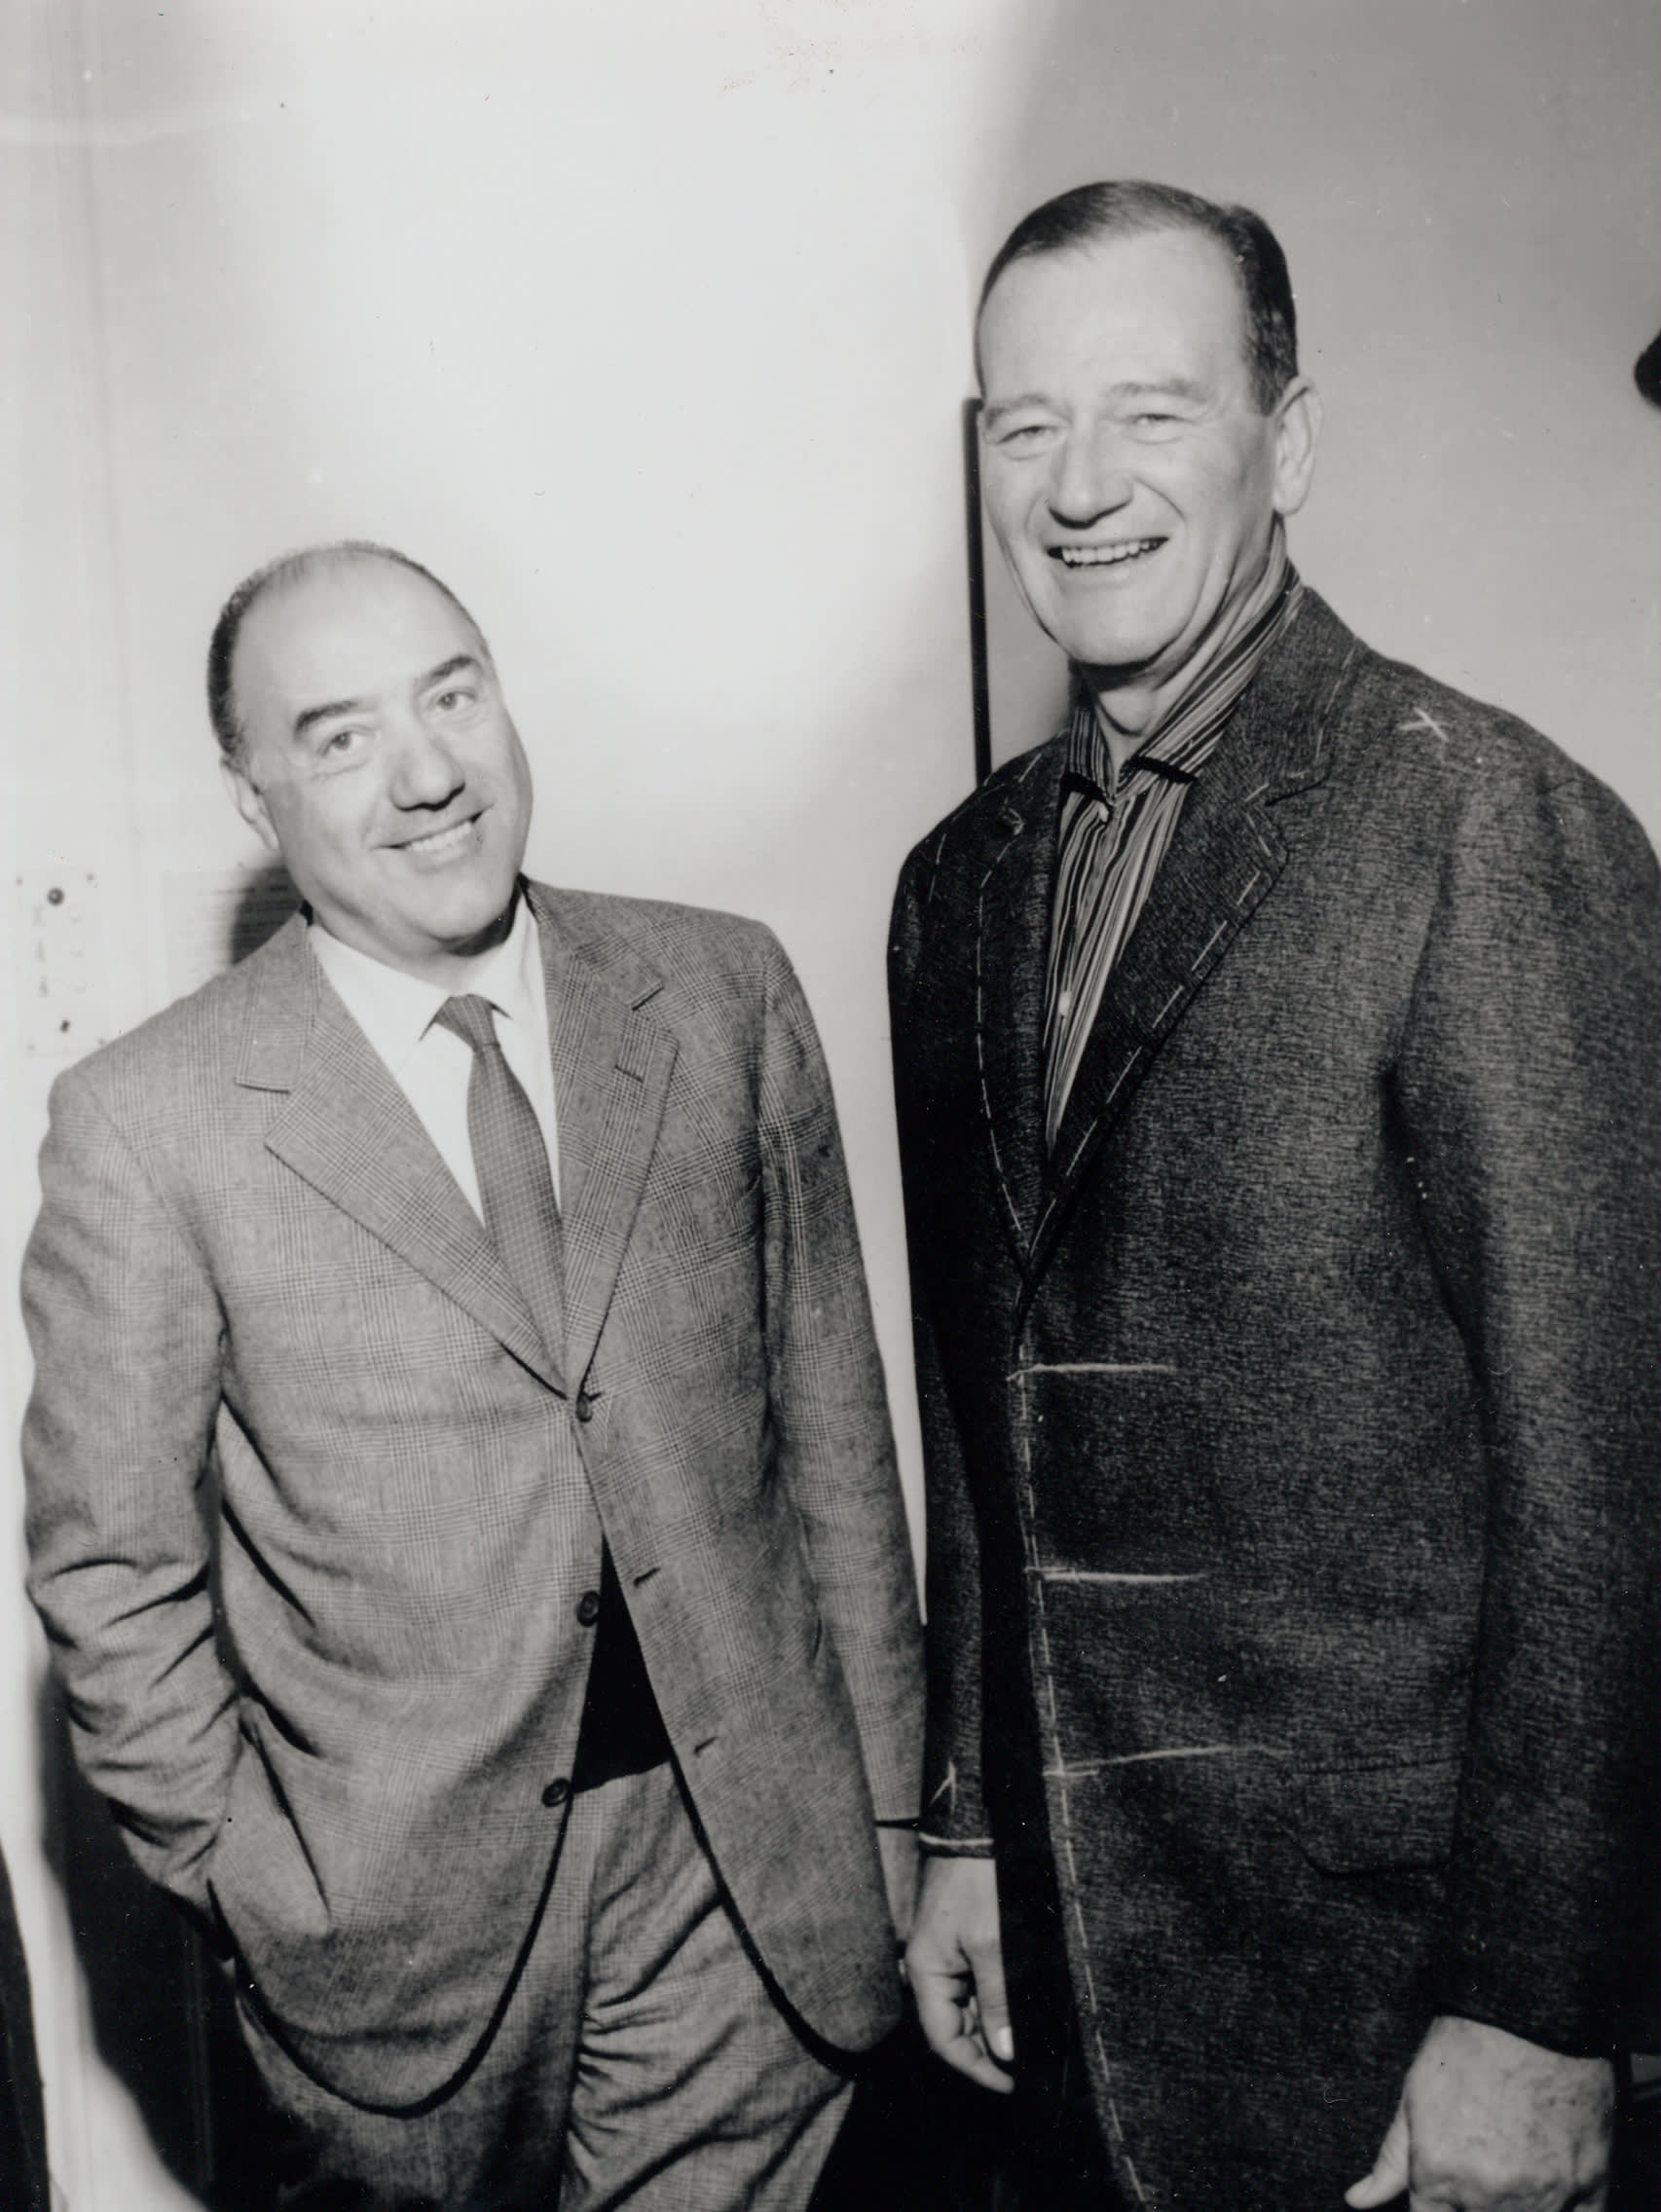 Brioni founder Gaetano Savini with American actor John Wayne